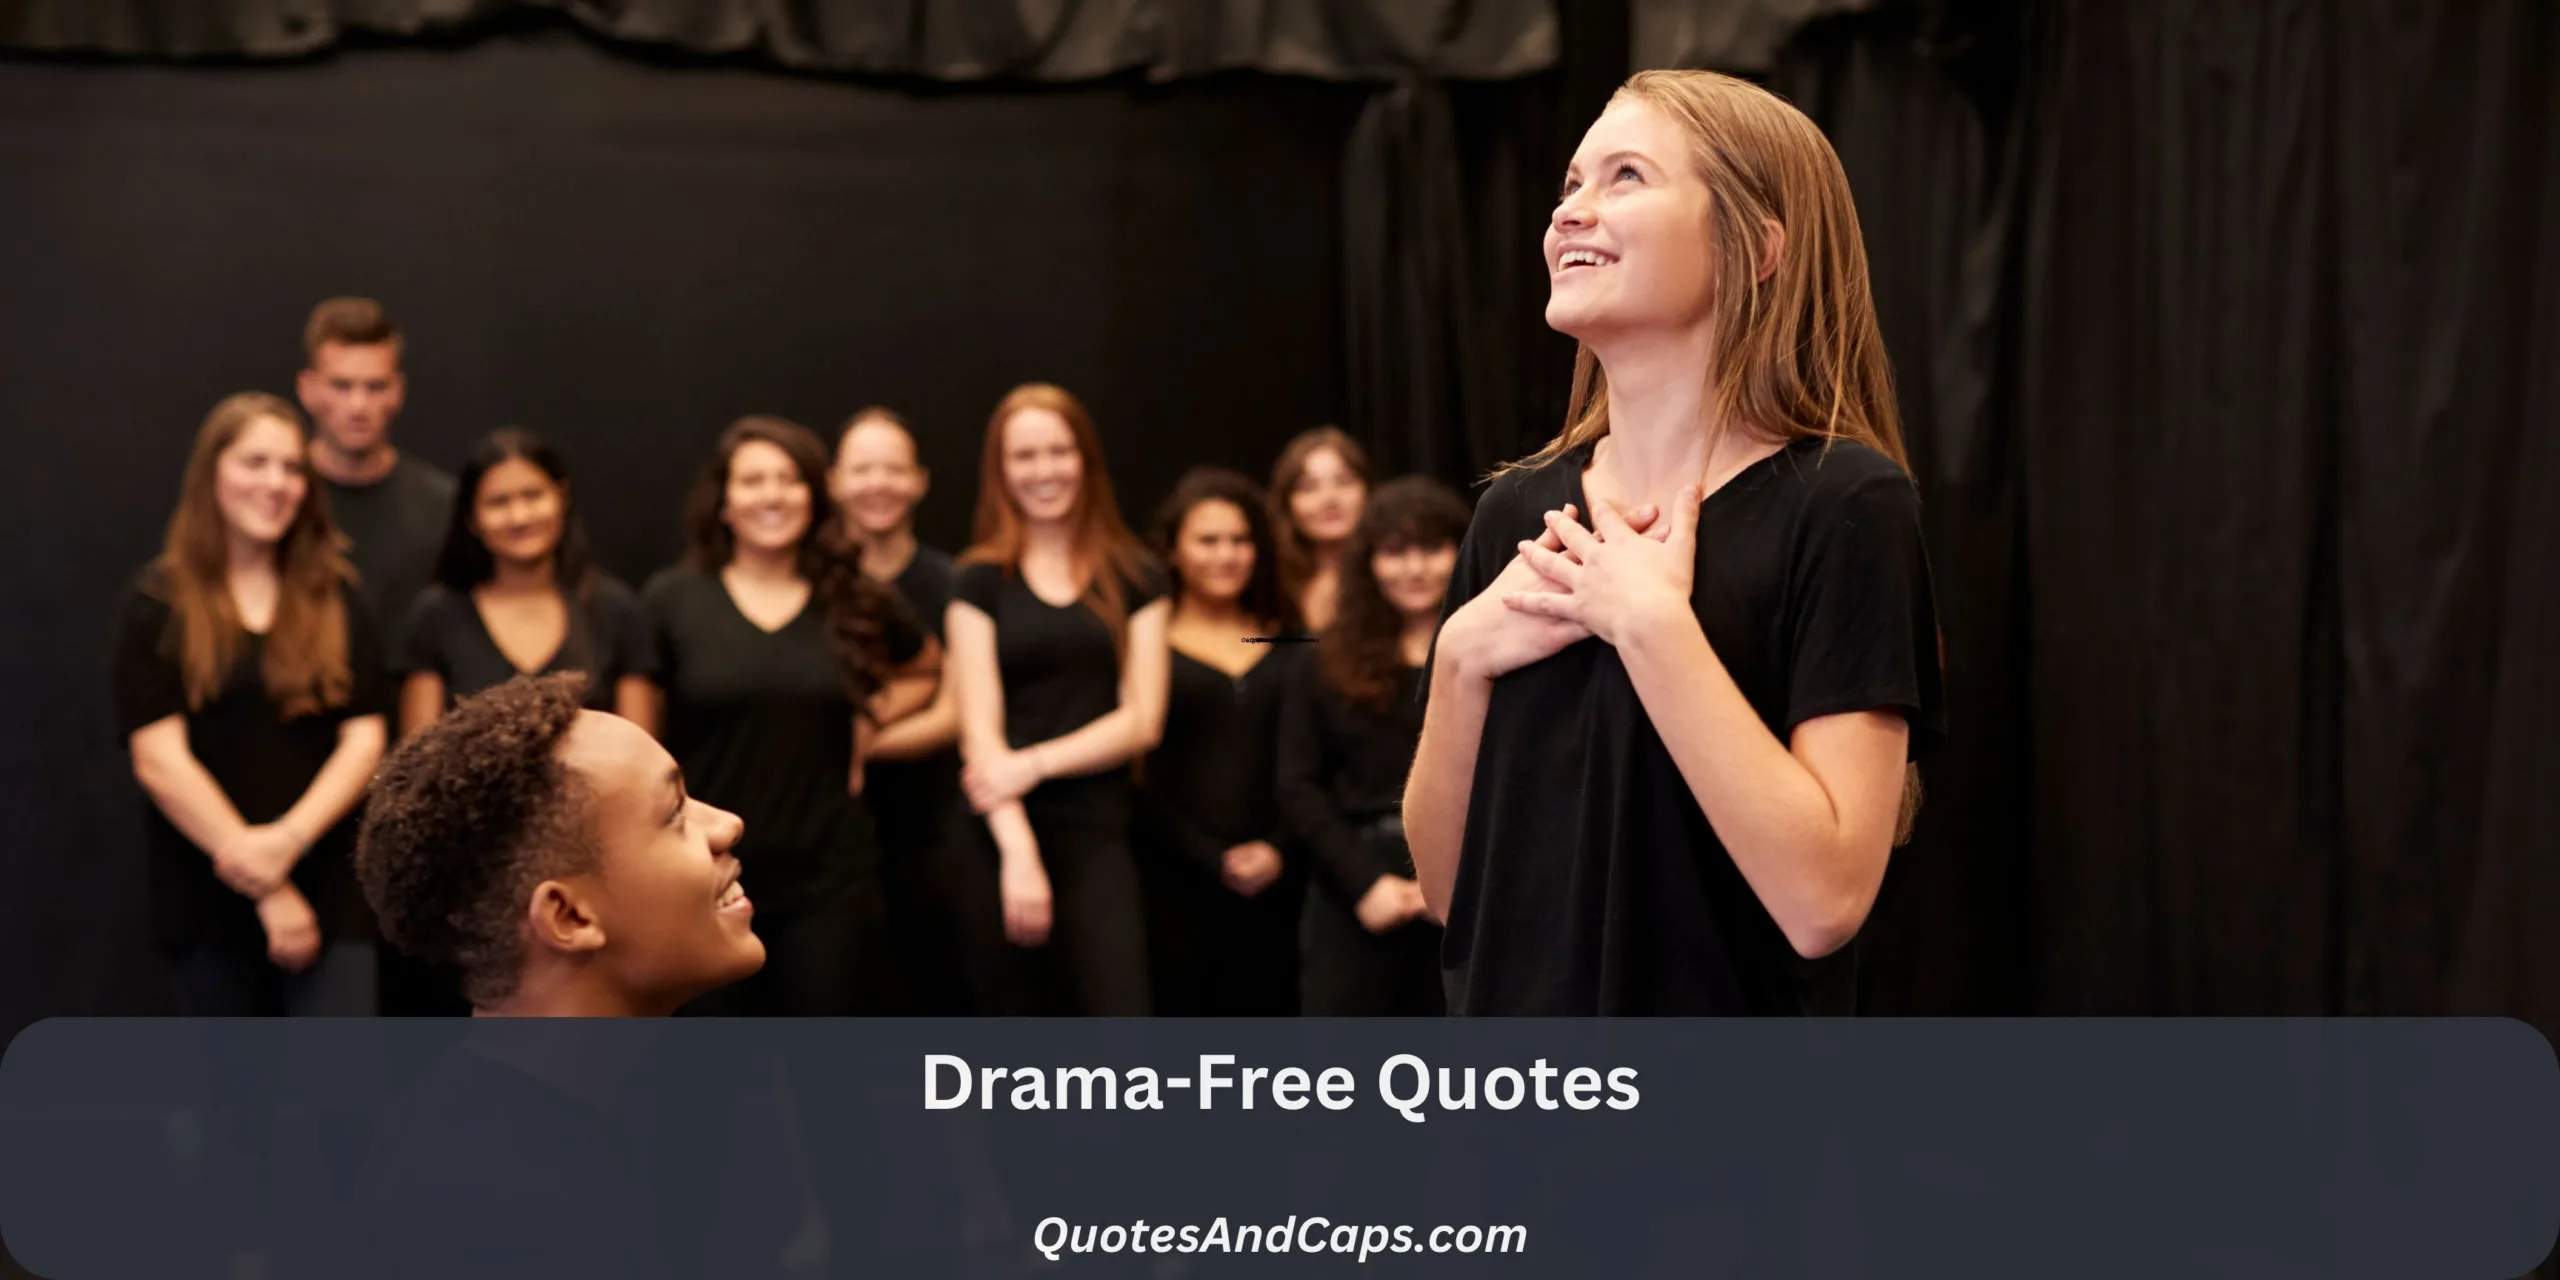 Drama-Free Quotes